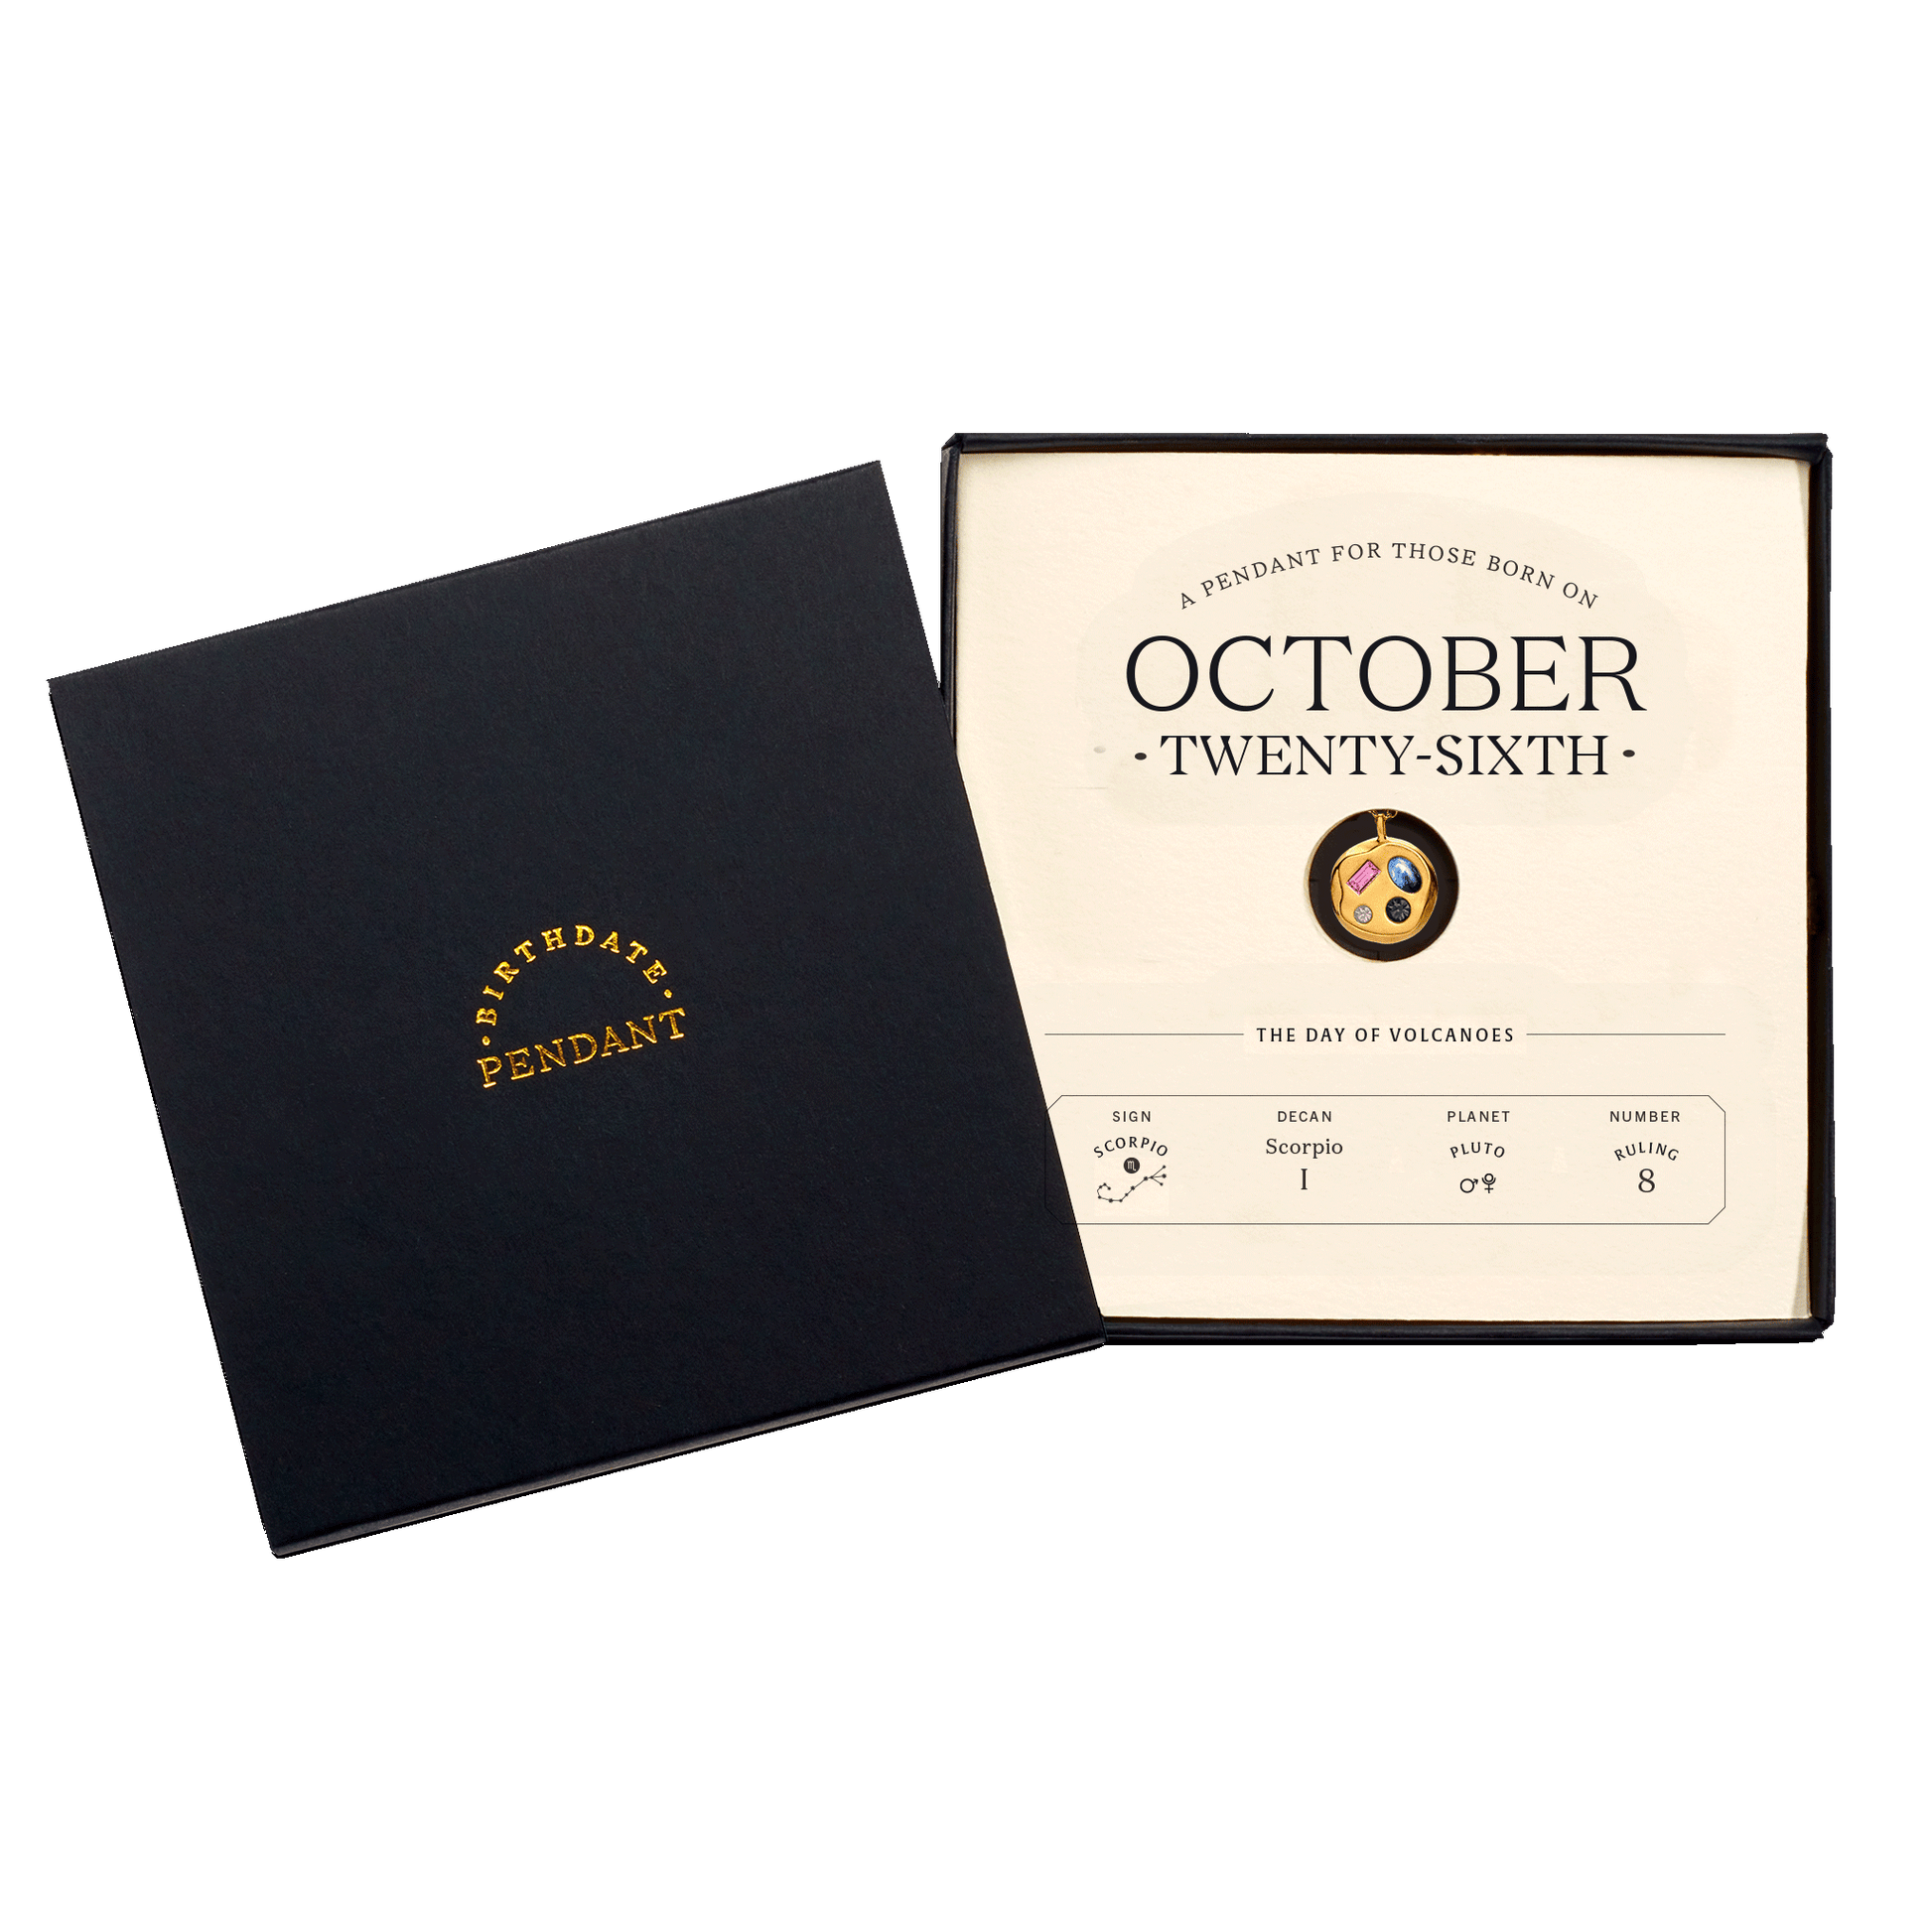 The October Twenty-Sixth Pendant inside its box